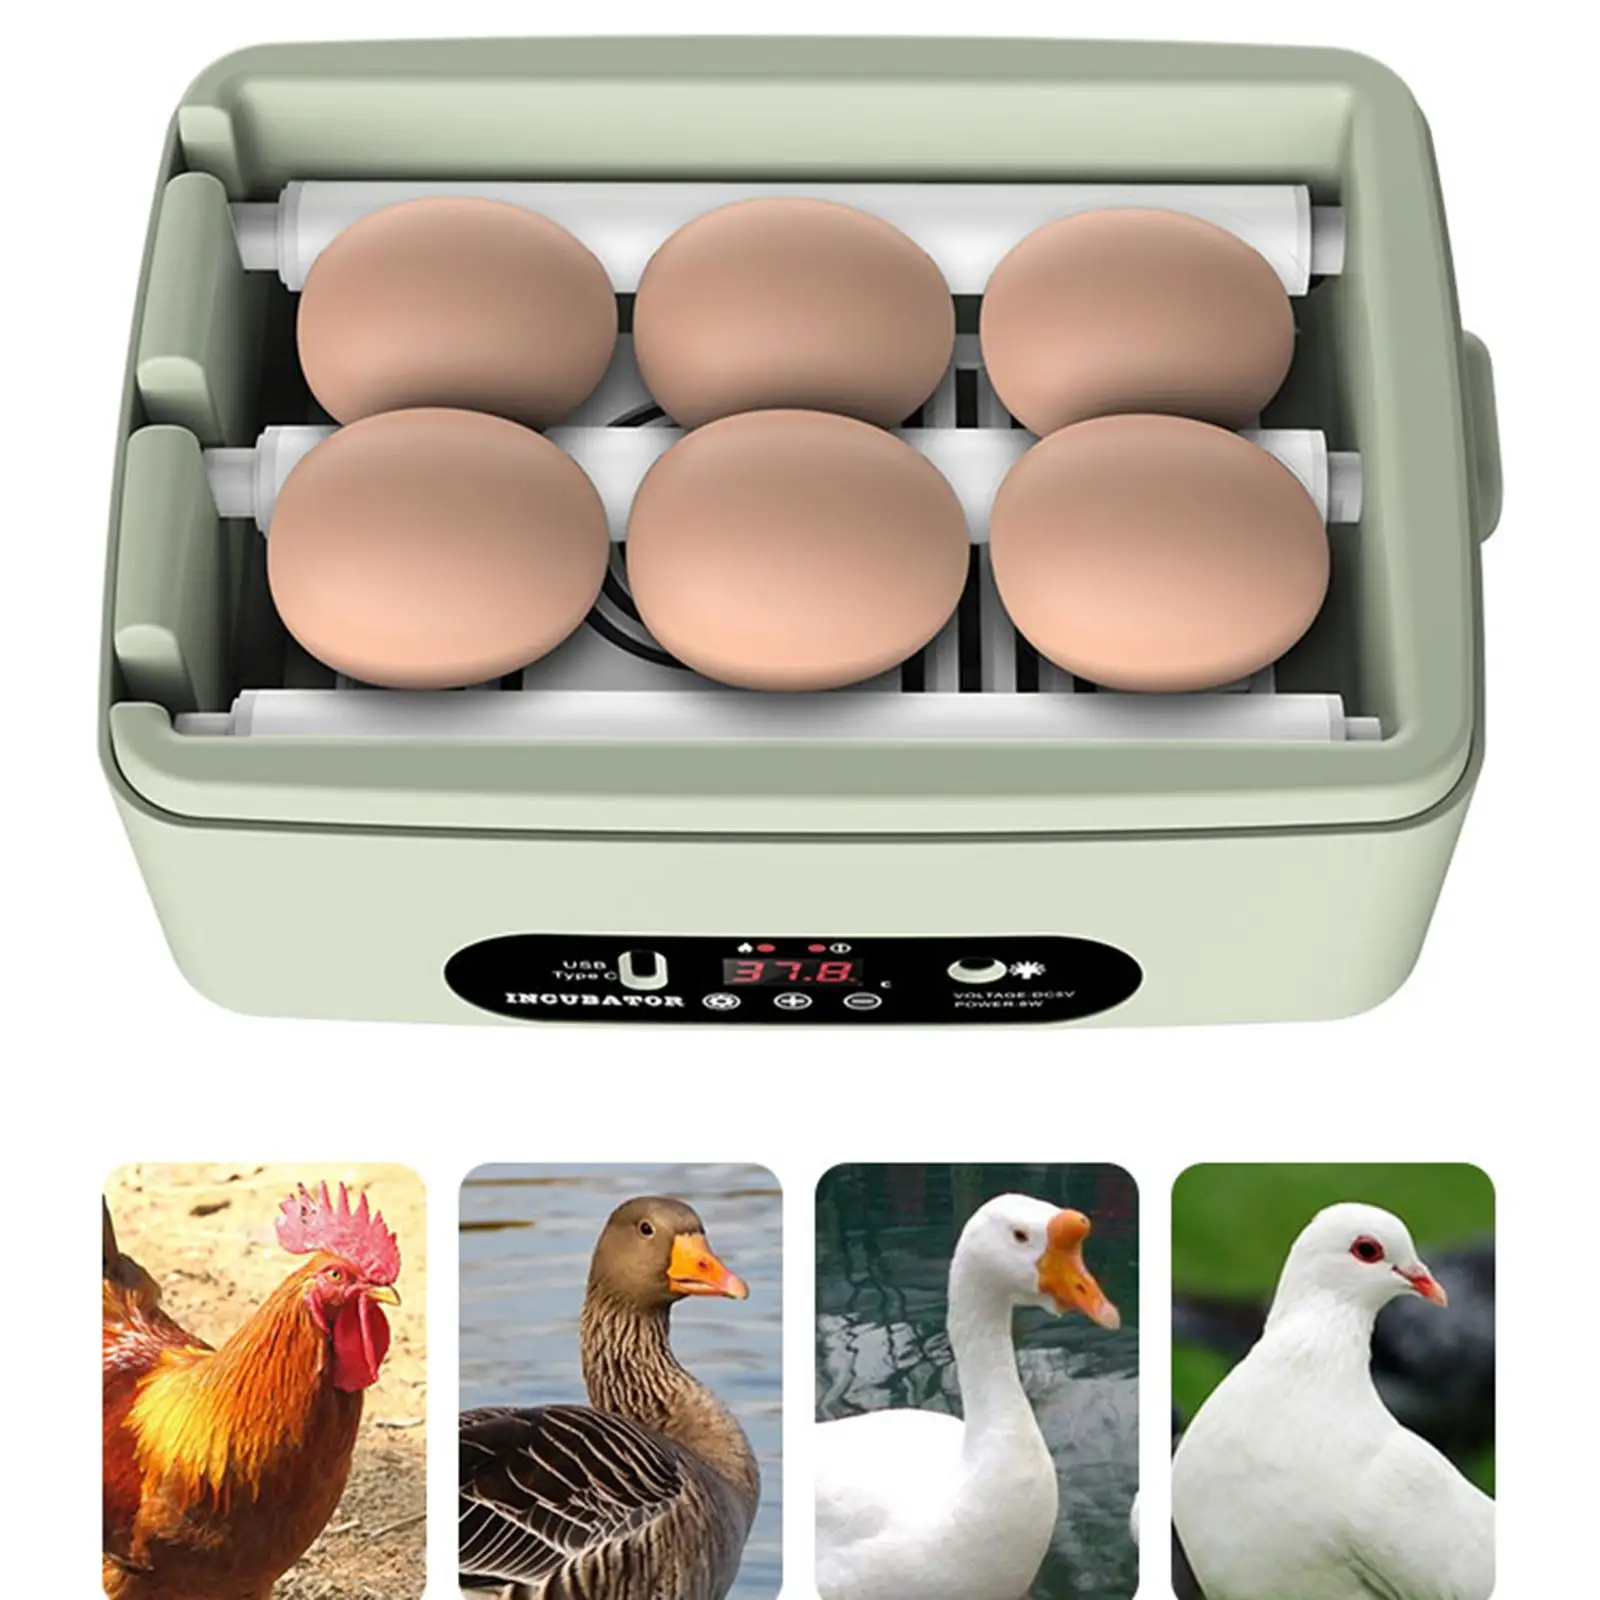 Automatic Egg Incubator Egg Turner Tray Egg Hatcher Machine 6 Eggs for Birds